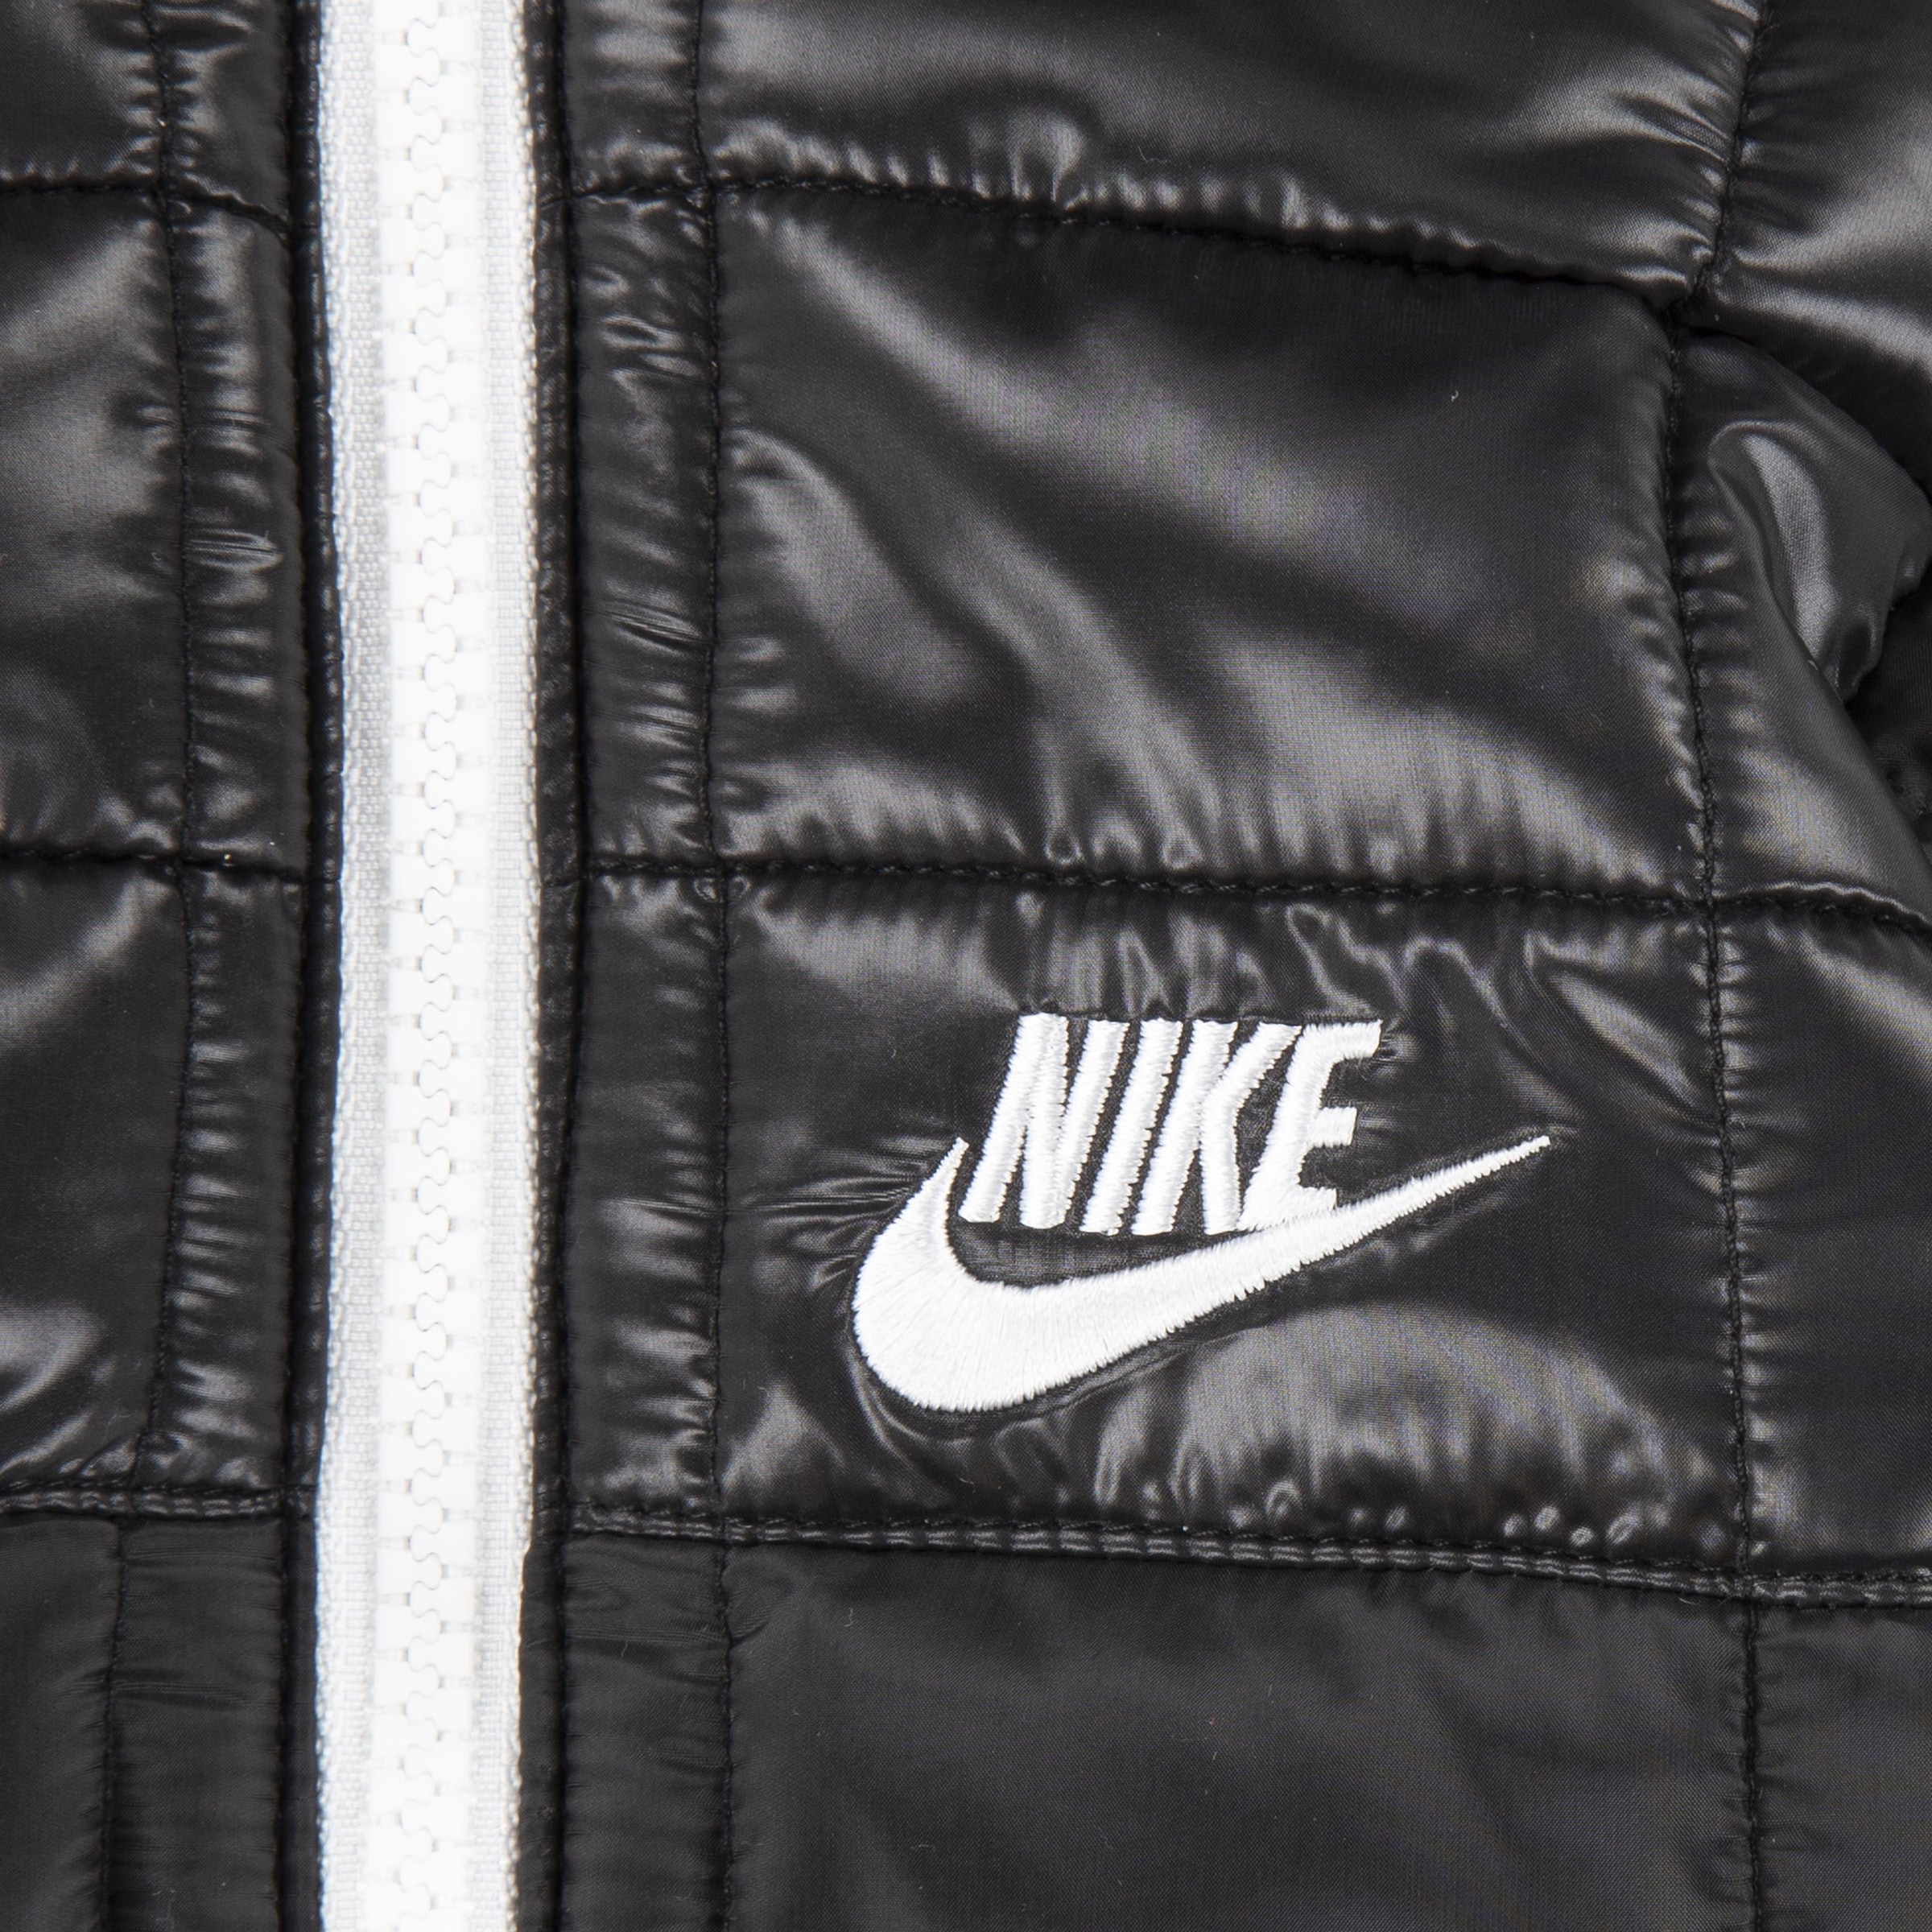 Nike Sportswear Schneeoverall »COLORBLOCK SNOWSUIT« kaufen bei OTTO